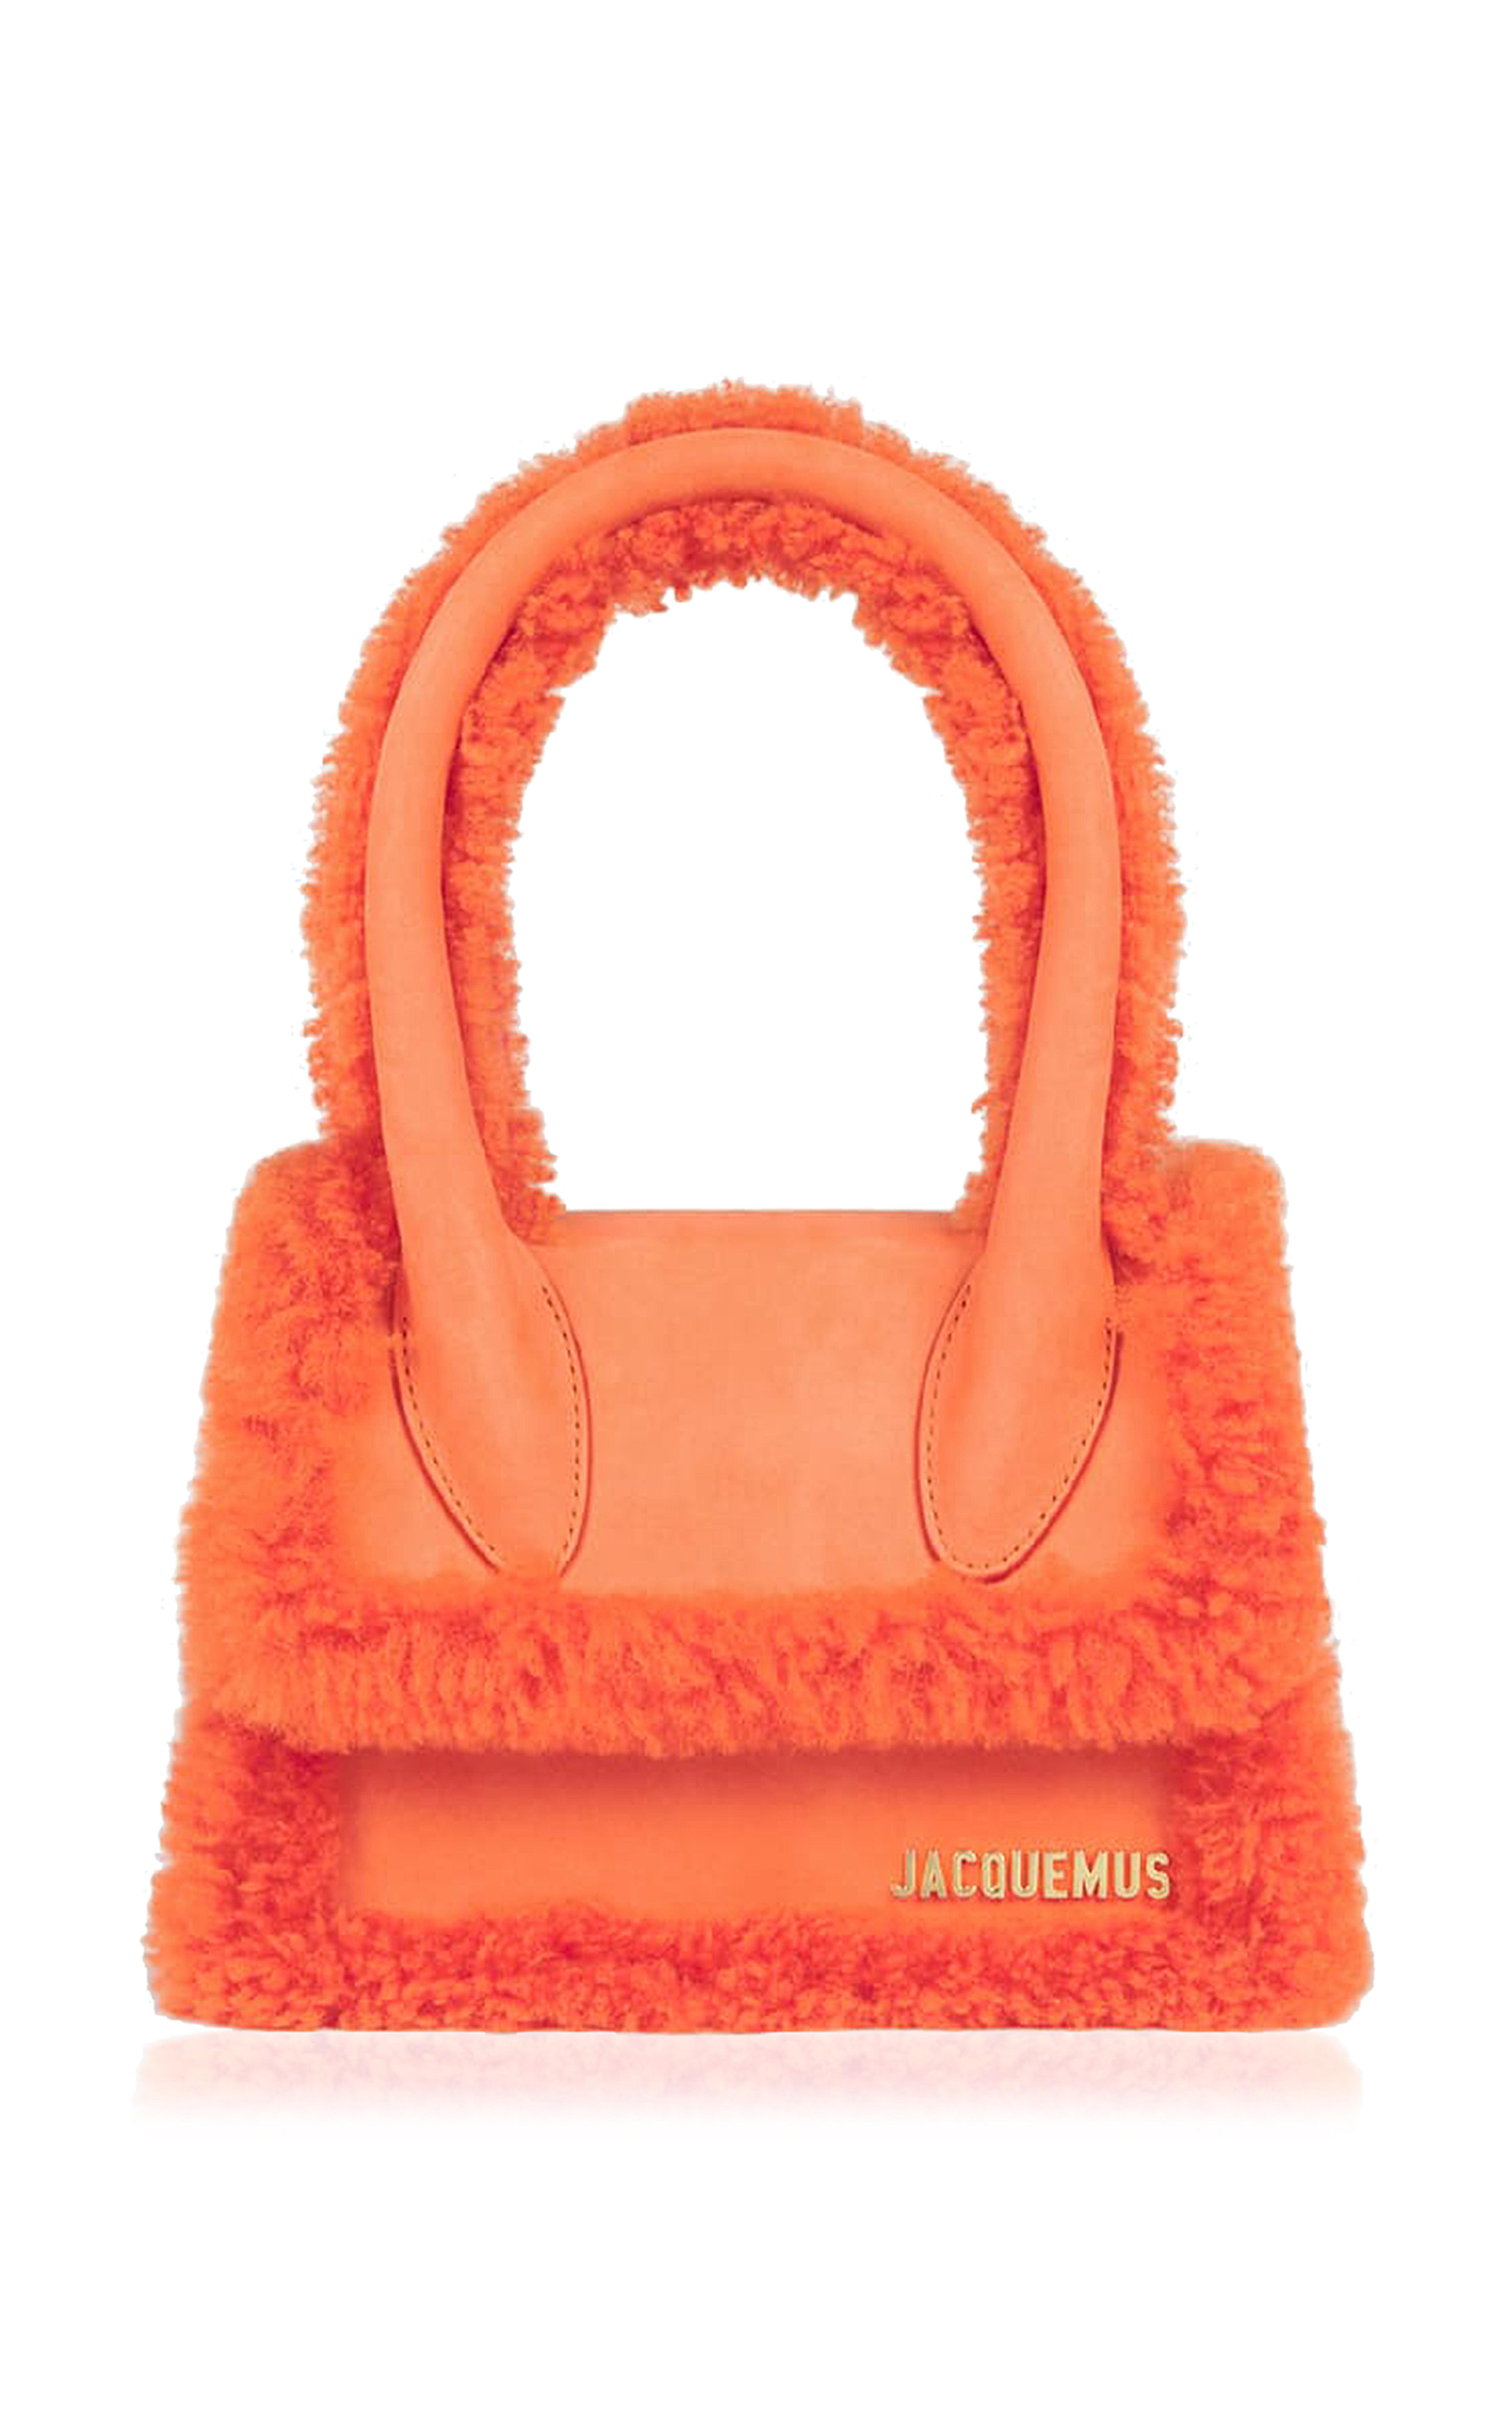 Jacquemus - Le Chiquito Shearling Top Handle Bag